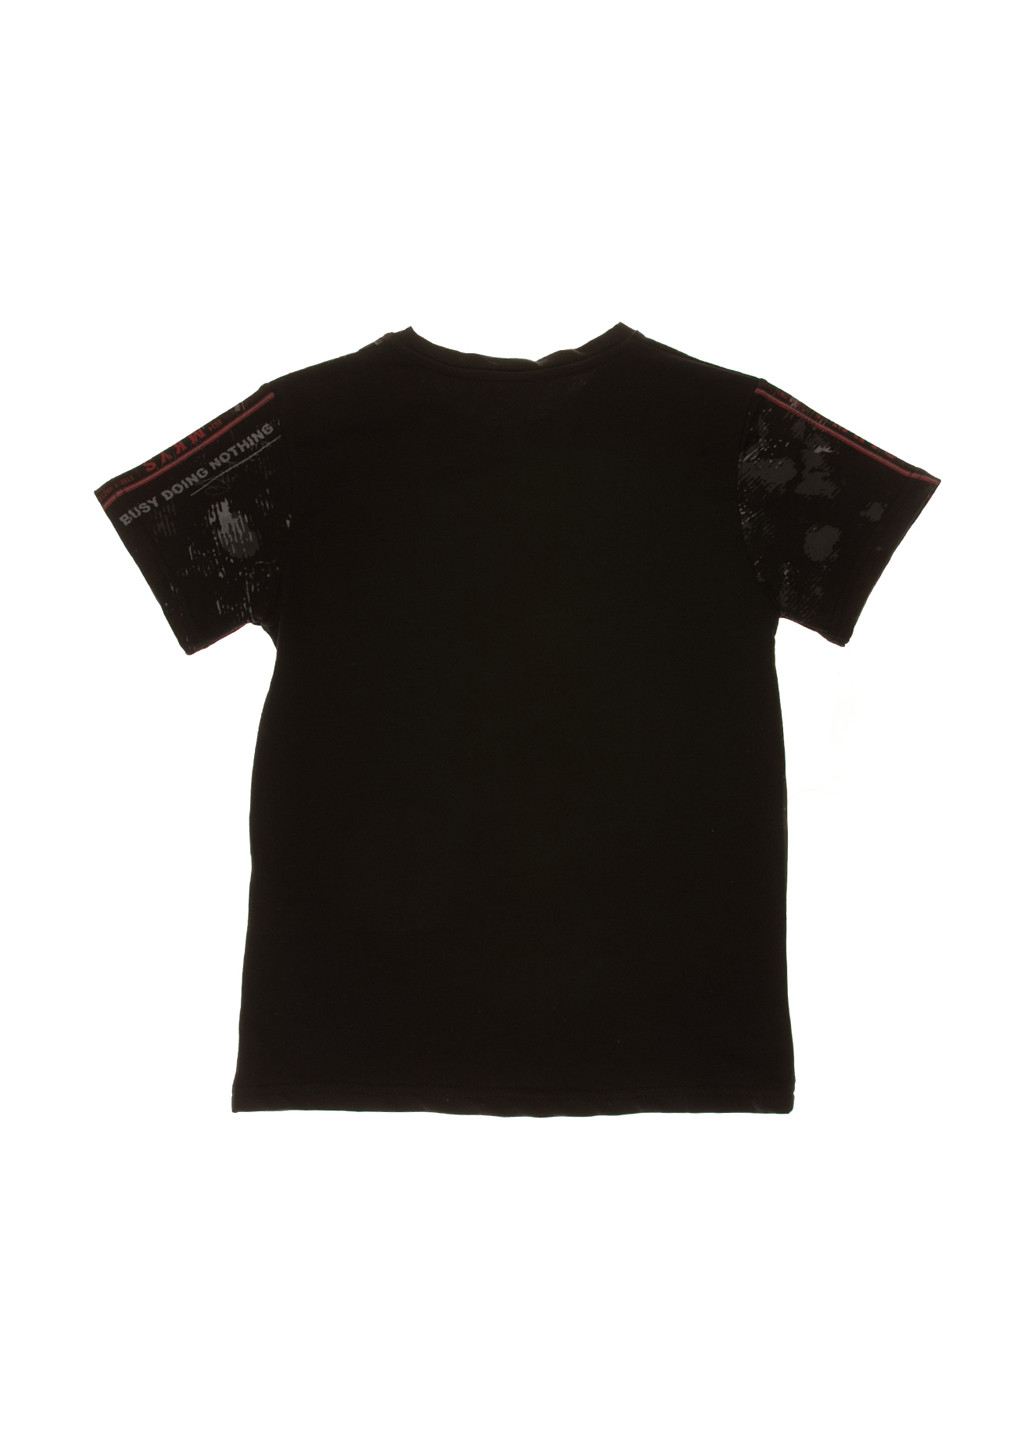 Черная летняя футболка с коротким рукавом Mackays